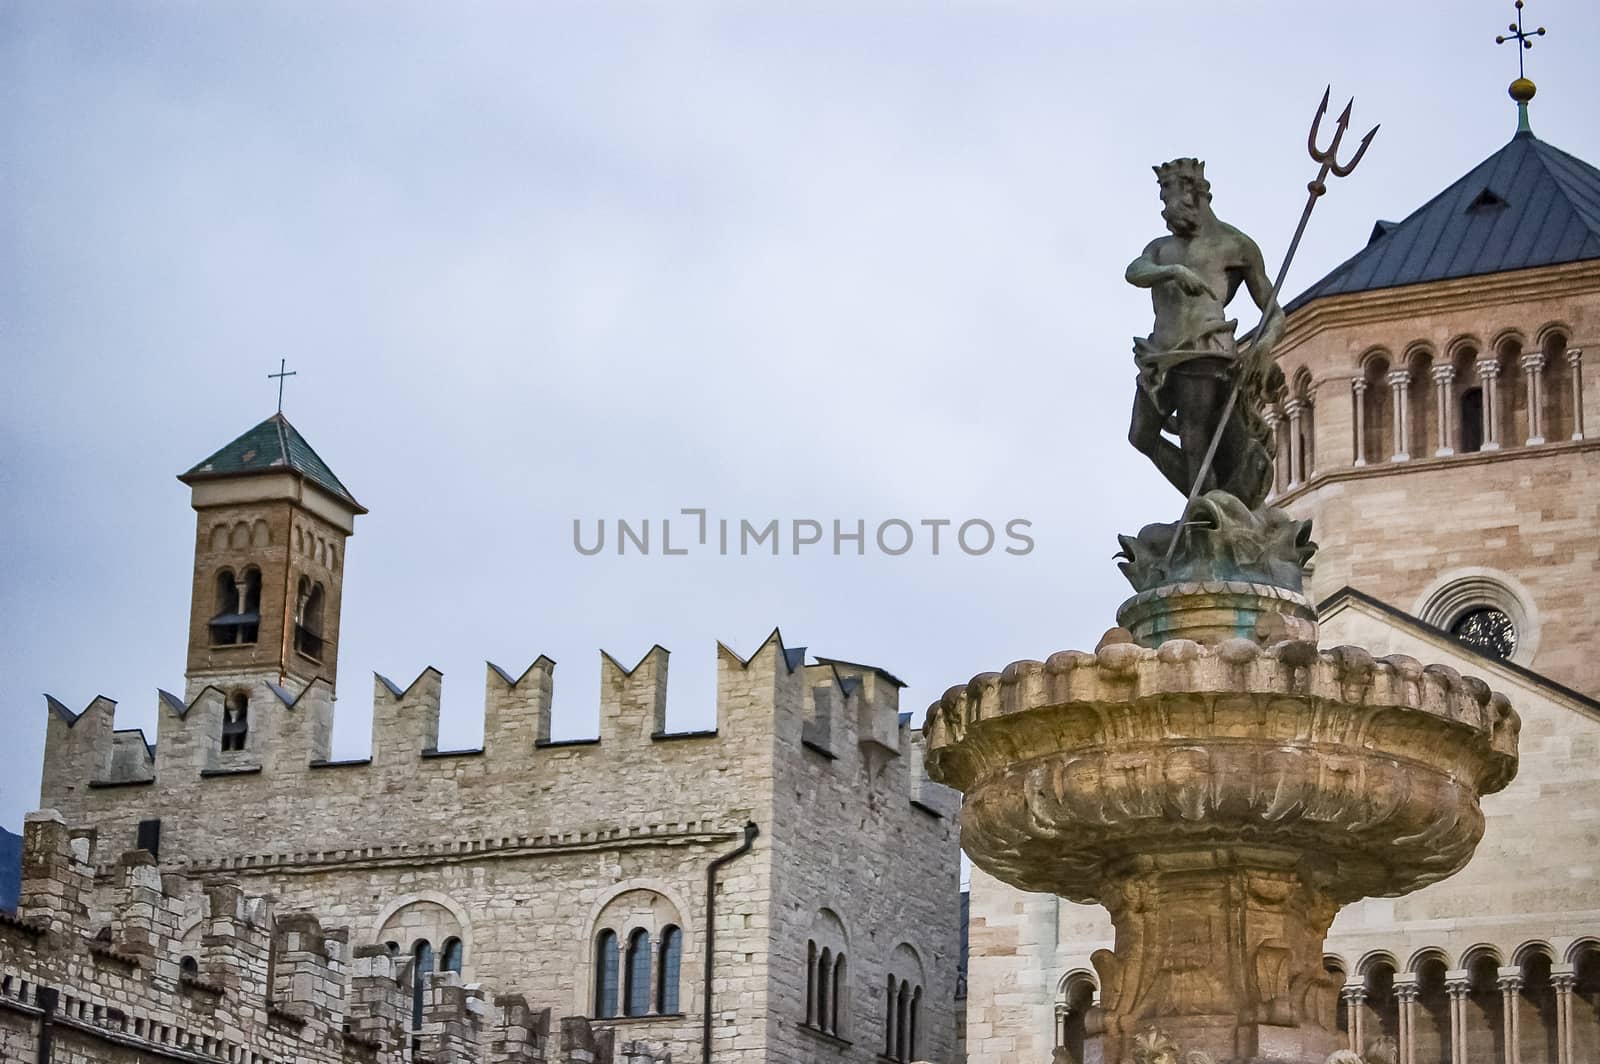 Fountain of Neptune in the city of Trento by edella